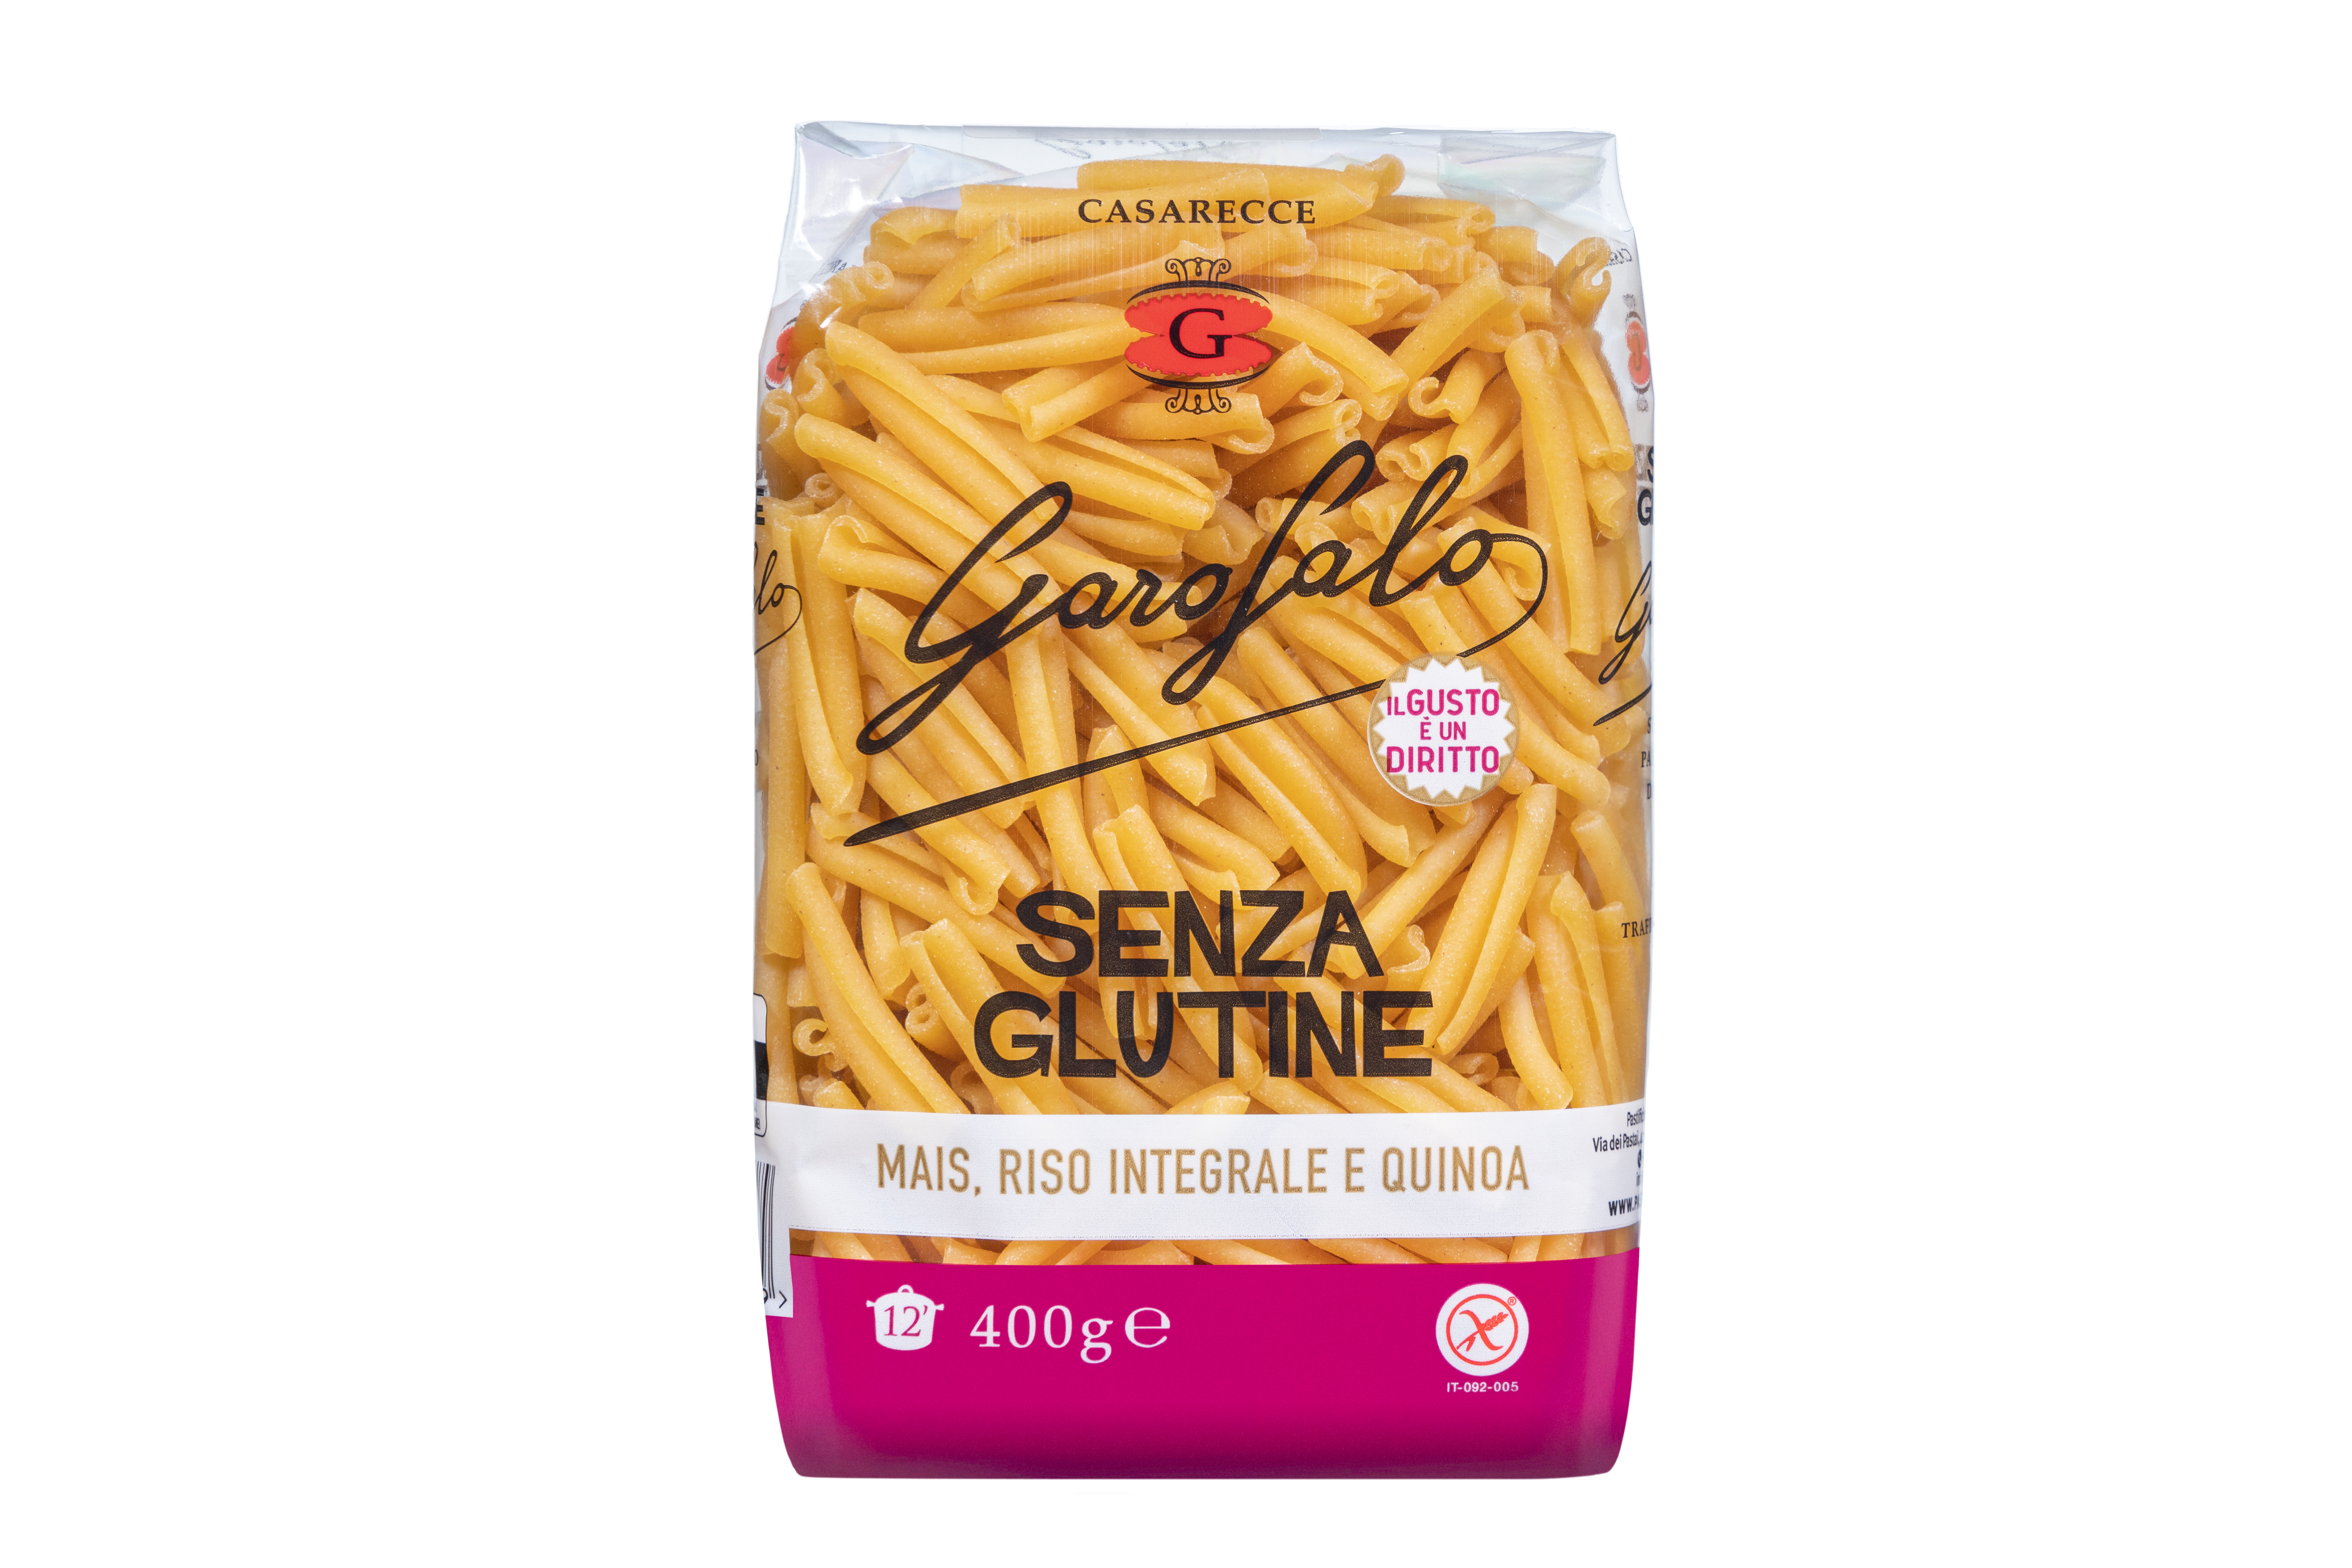 Pasta Garofalo - Casarecce Senza Glutine